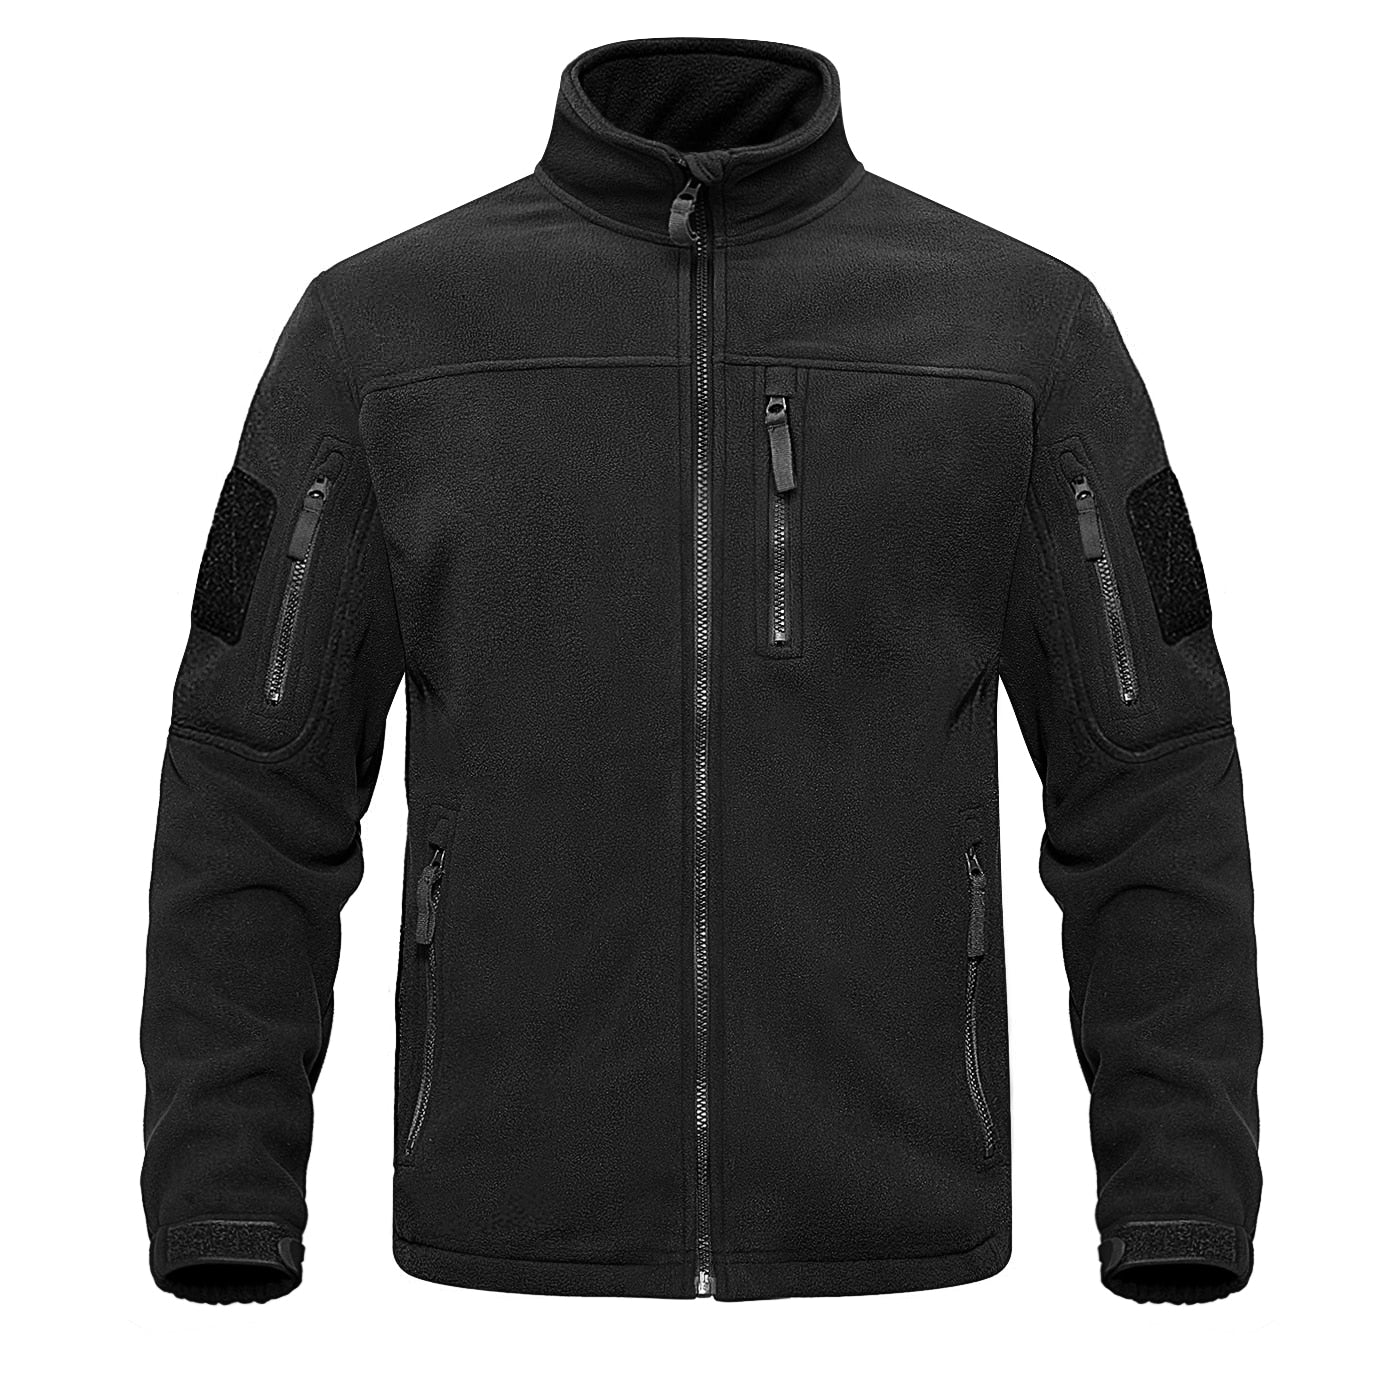 Men's Tactical Army Fleece Military Jacket black